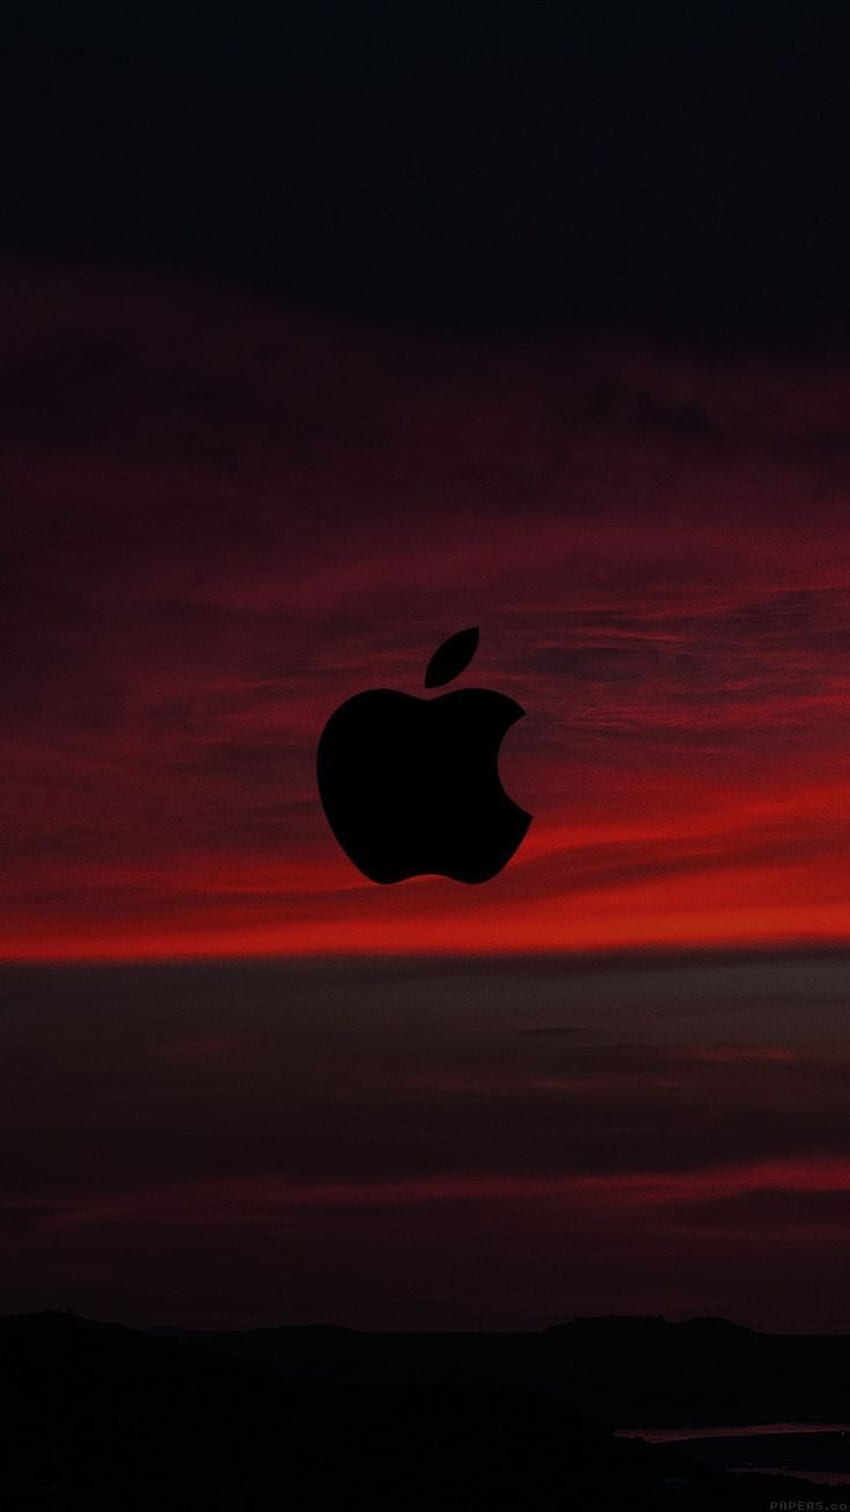 Red and Black iPhone - Top Red and Black iPhone Background - Wallpap in 2021. Black iphone, Apple iphone, Apple logo iphone HD電話の壁紙